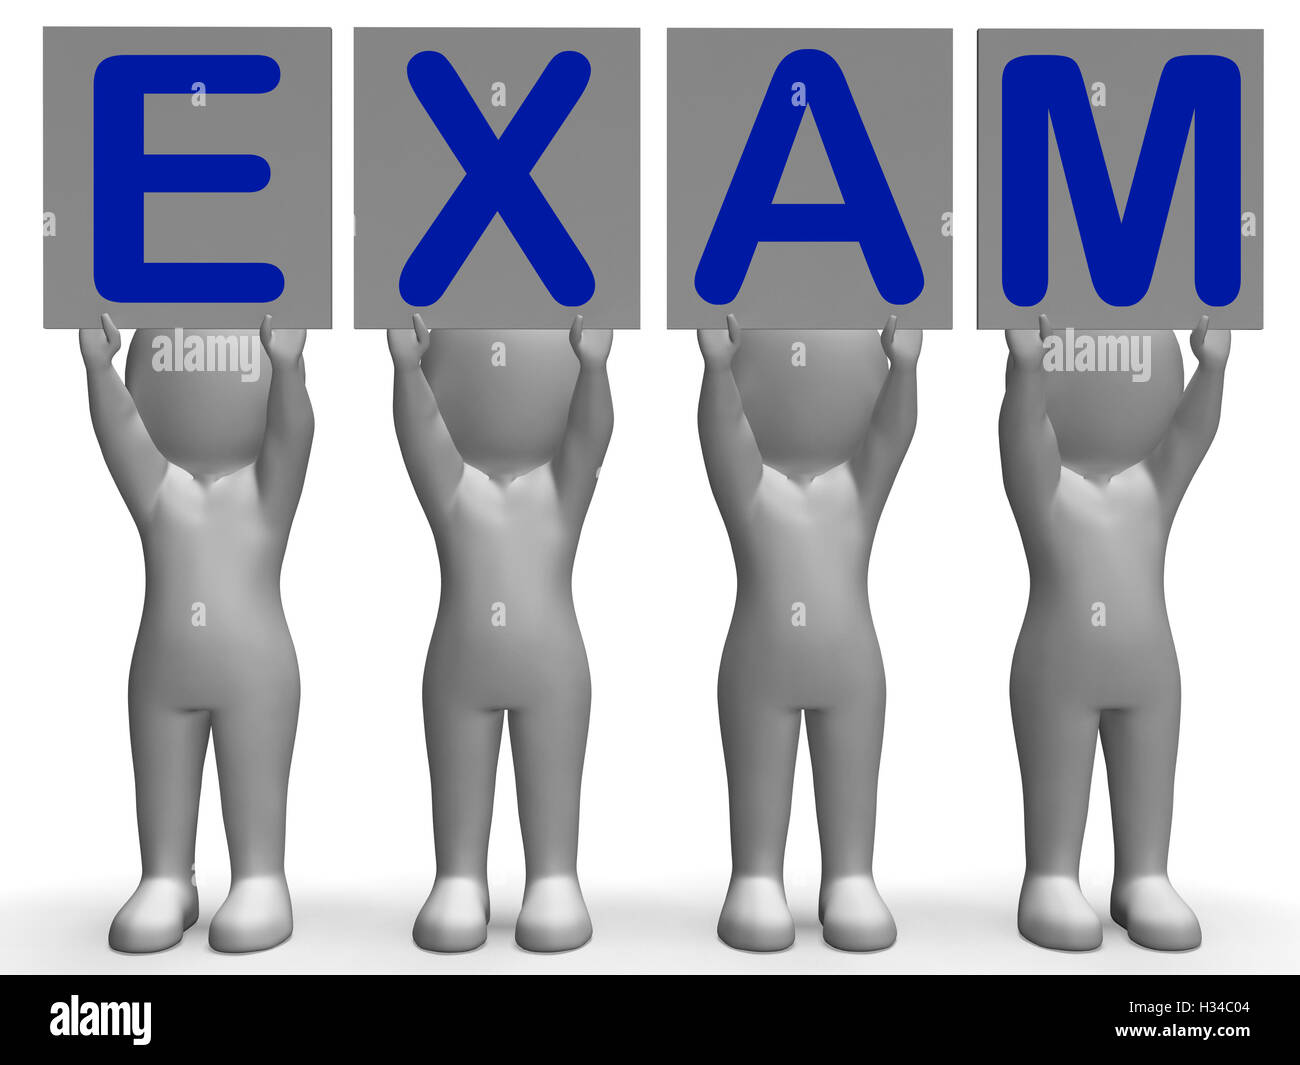 Examen Banners significa extrema Cuestionario o examen Foto de stock